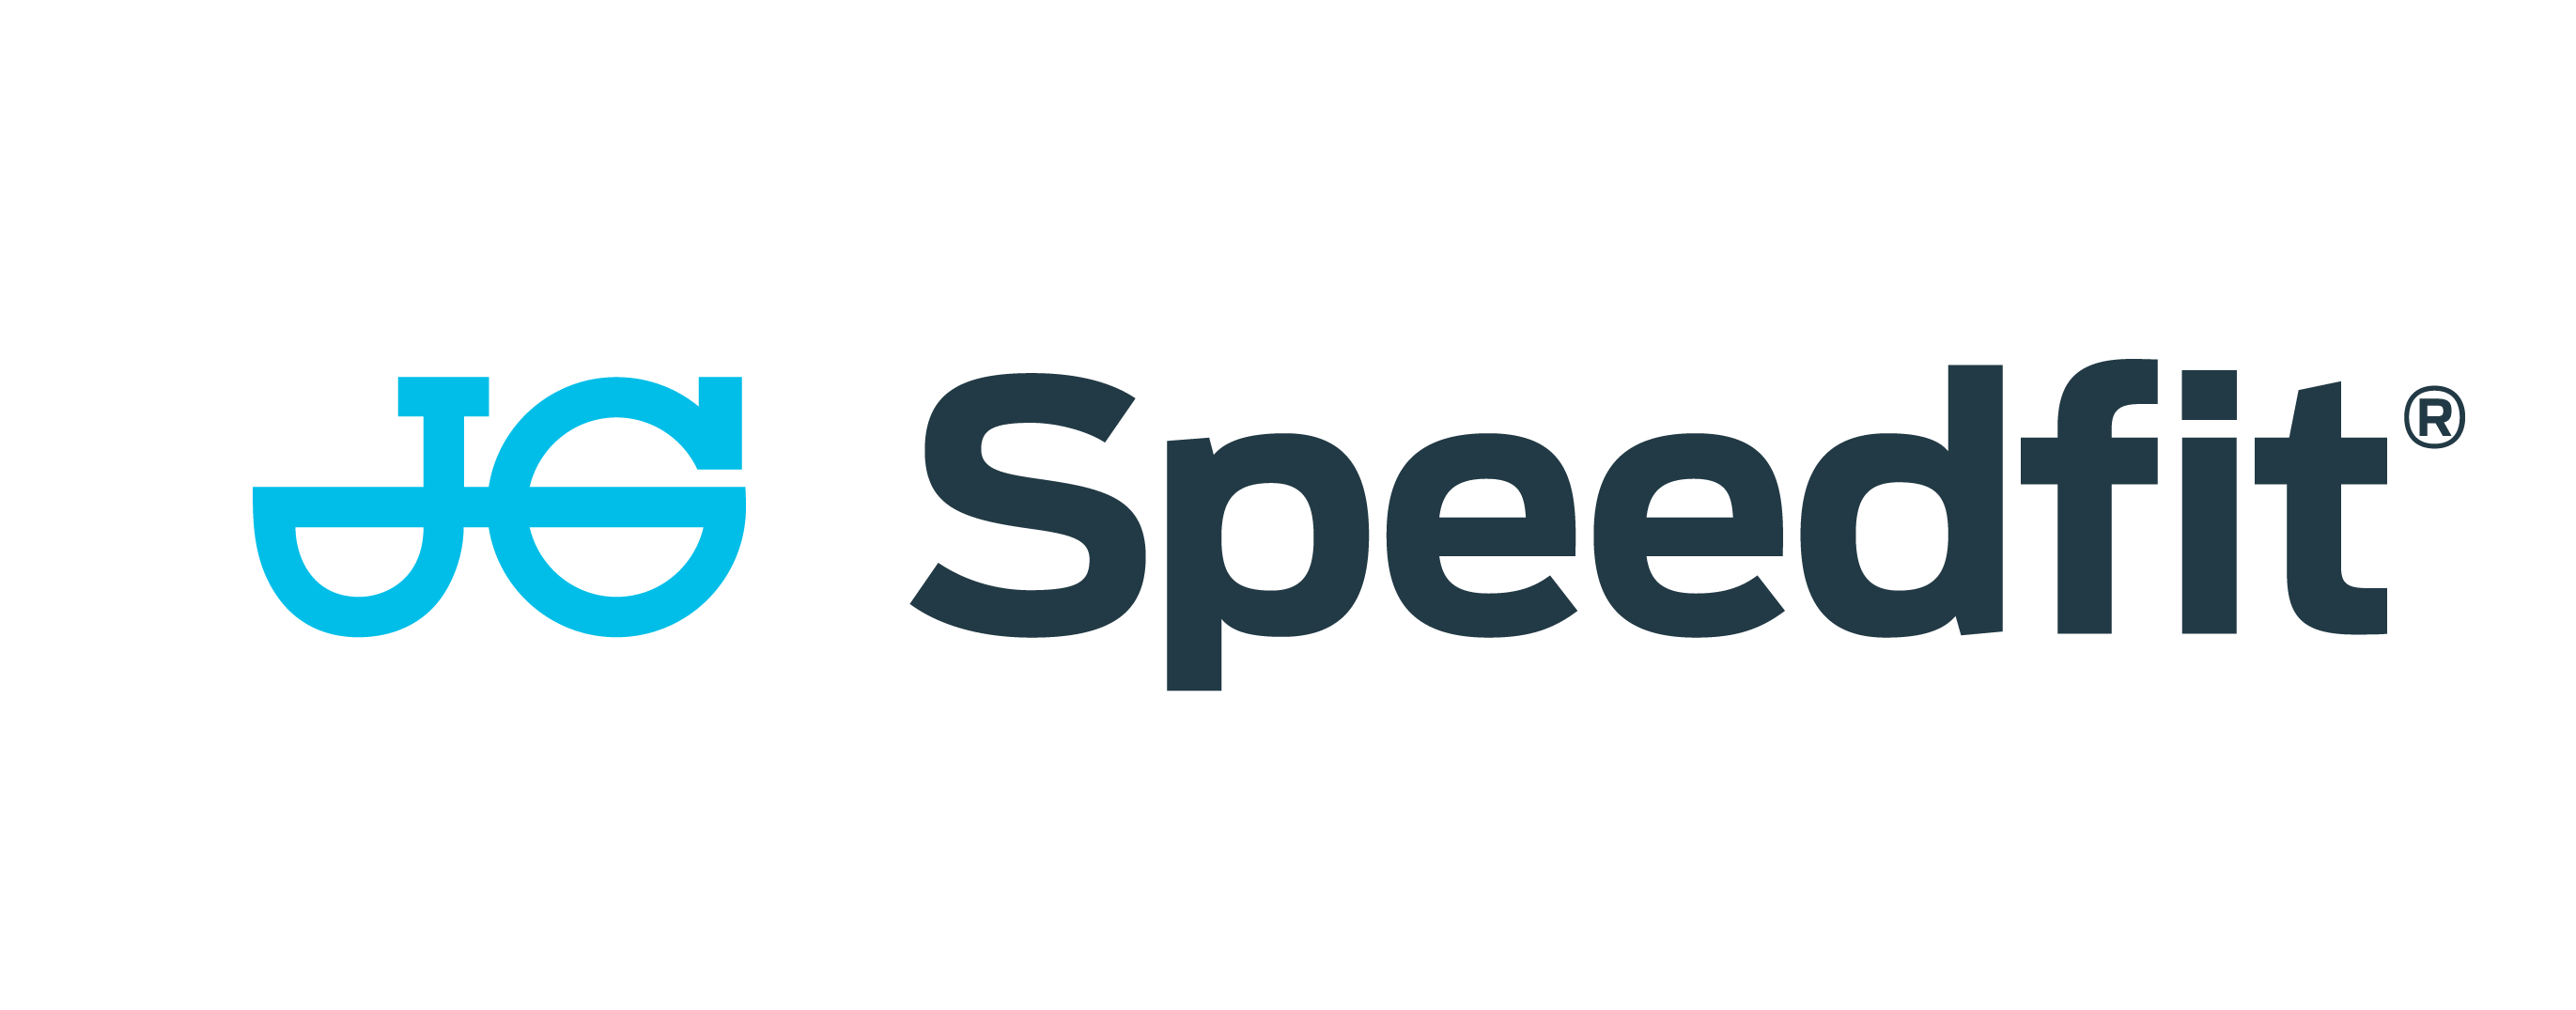 speedfit-logo-for-light-background.png